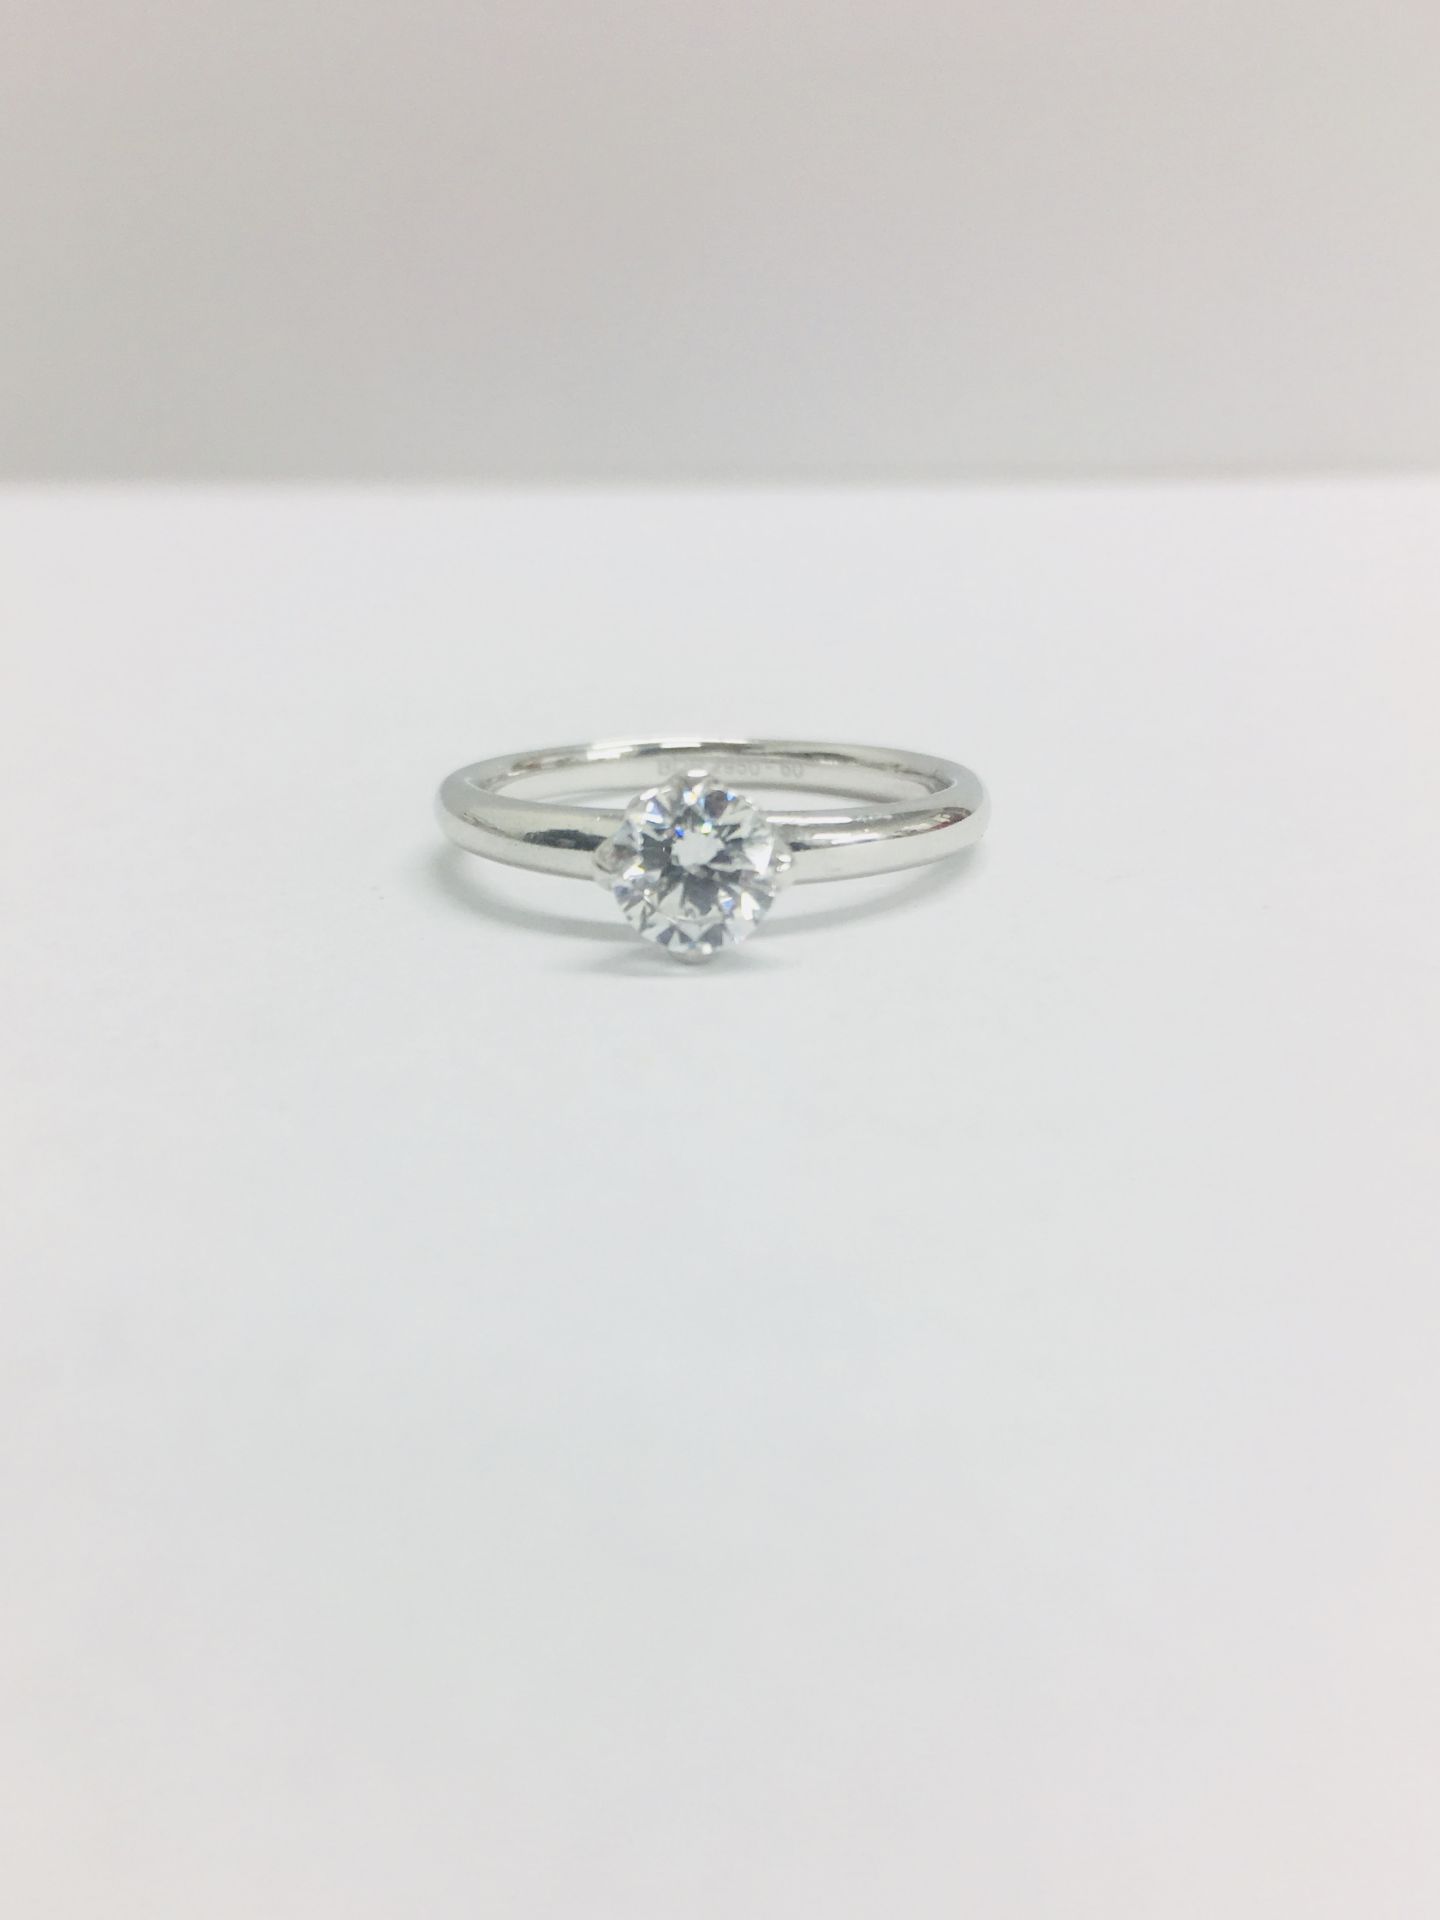 Platinum diamond solitaire ring,0.50ct brillliant cut diamond h colour vs clarity(clarity enhanced),